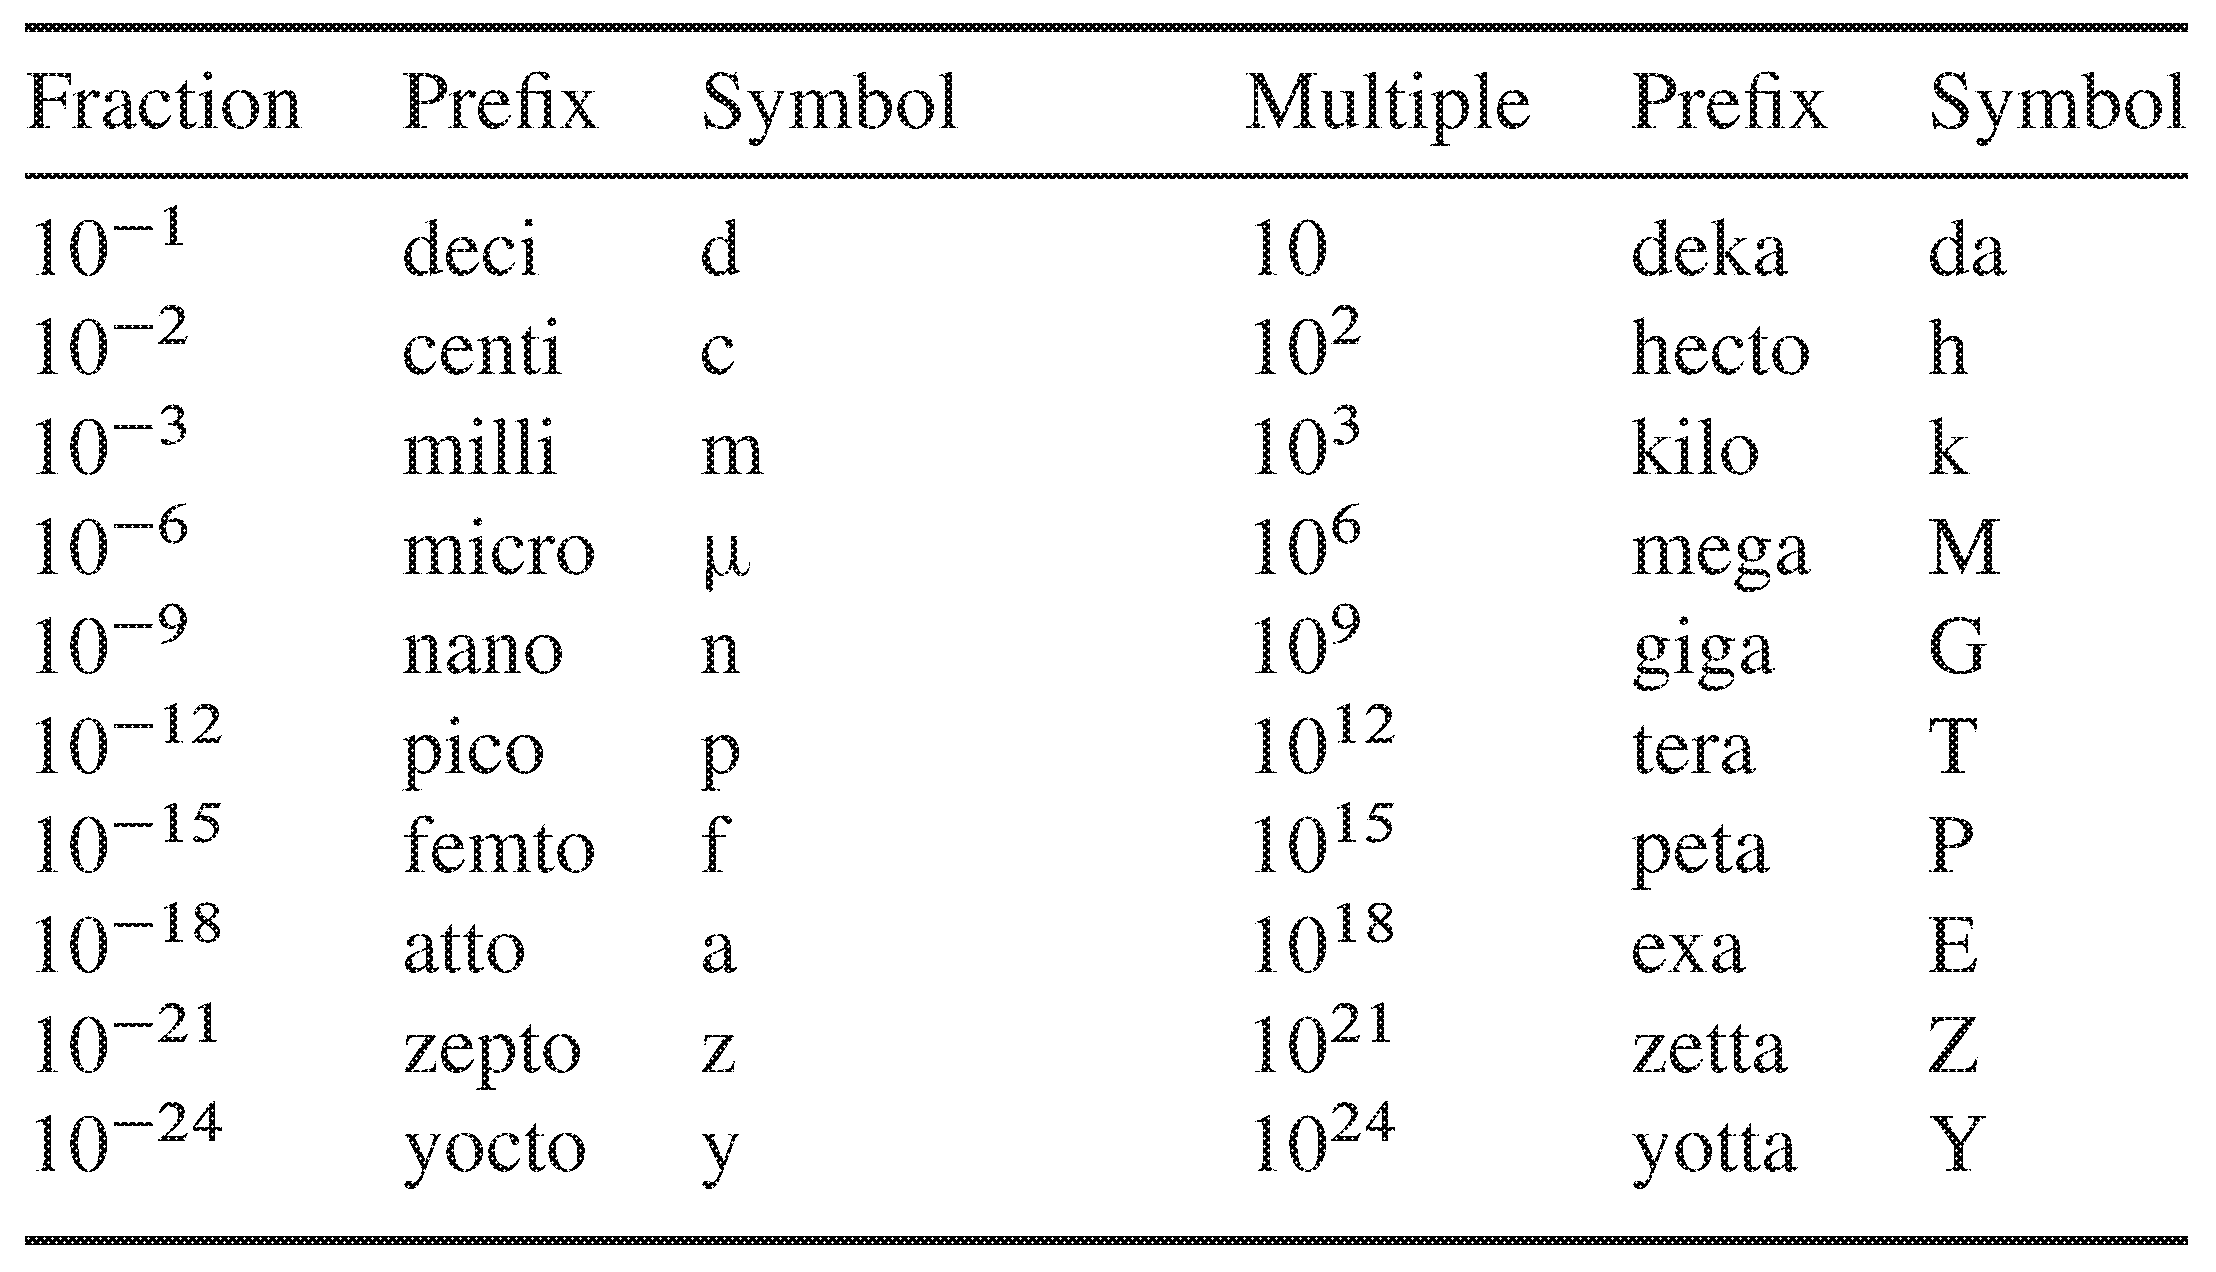 all-metric-prefixes-chart